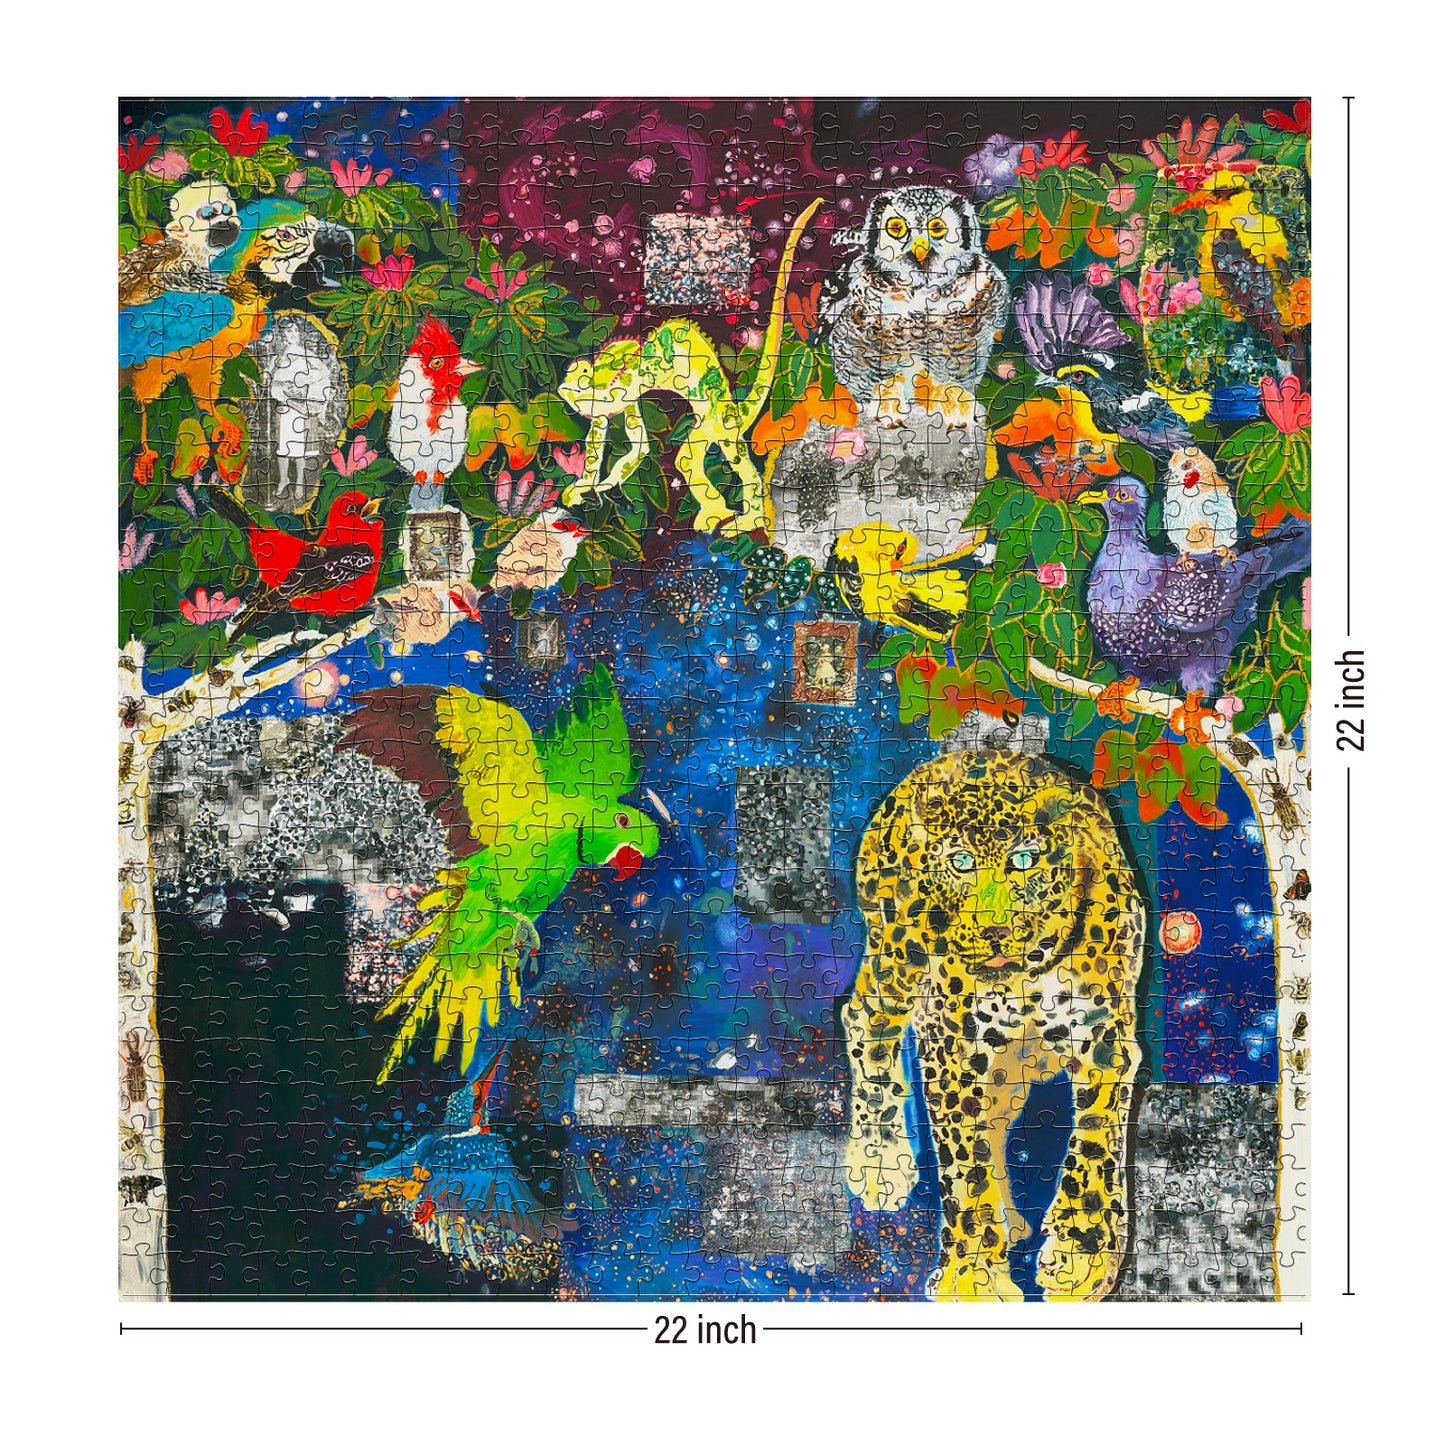 Jungle Singers by Enzhao Liu 1000 Piece Jigsaw Puzzle